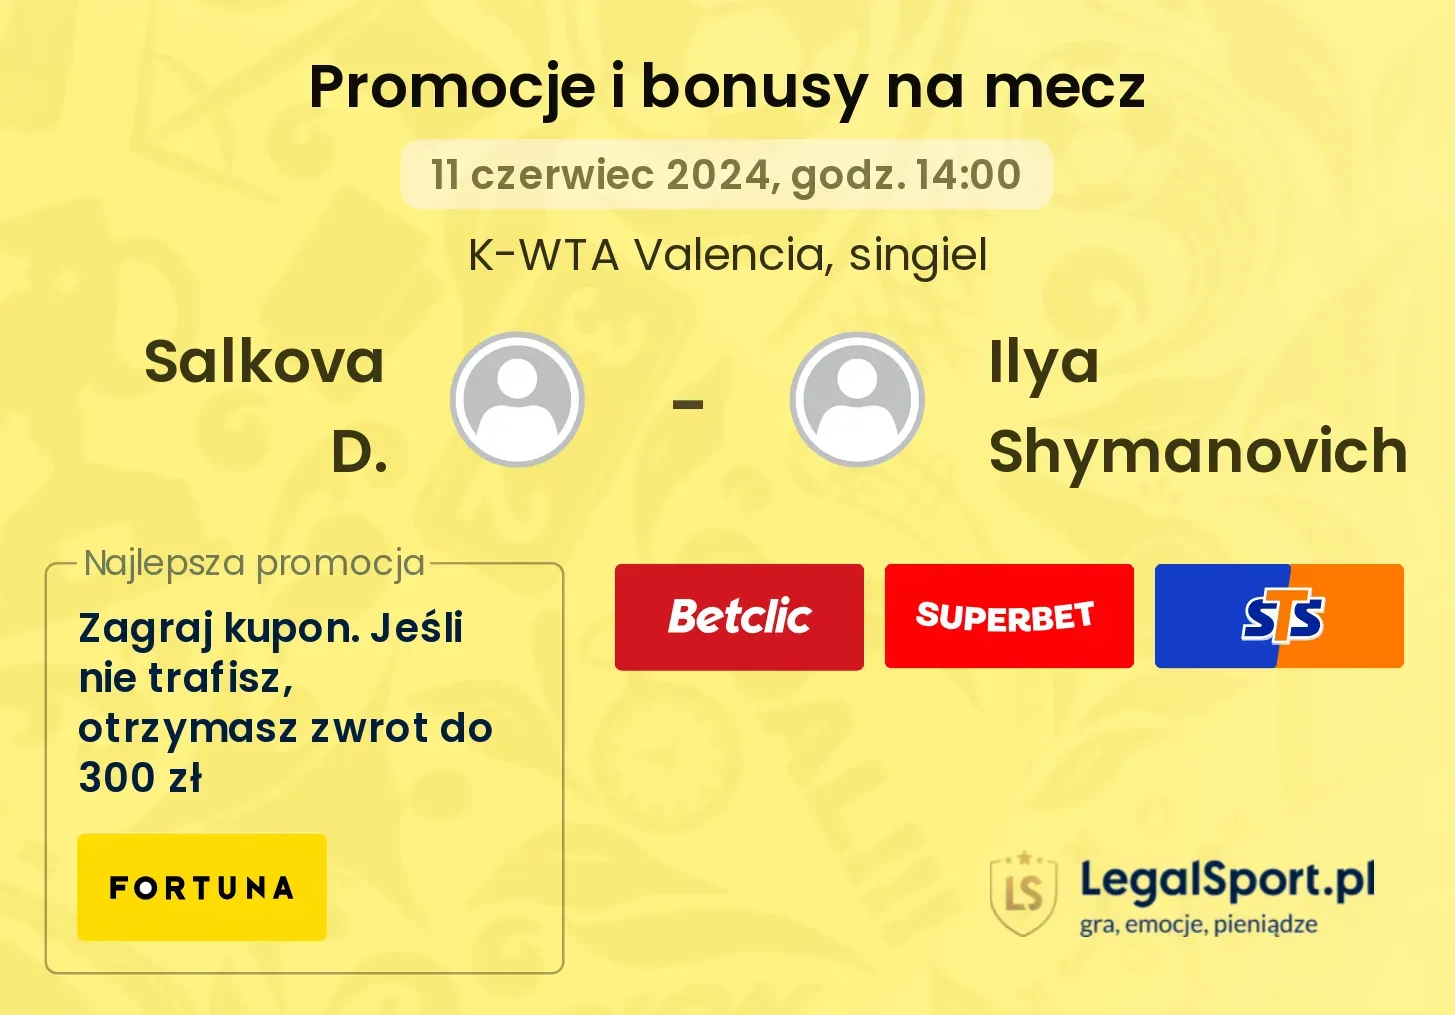 Salkova D. - Ilya Shymanovich promocje bonusy na mecz